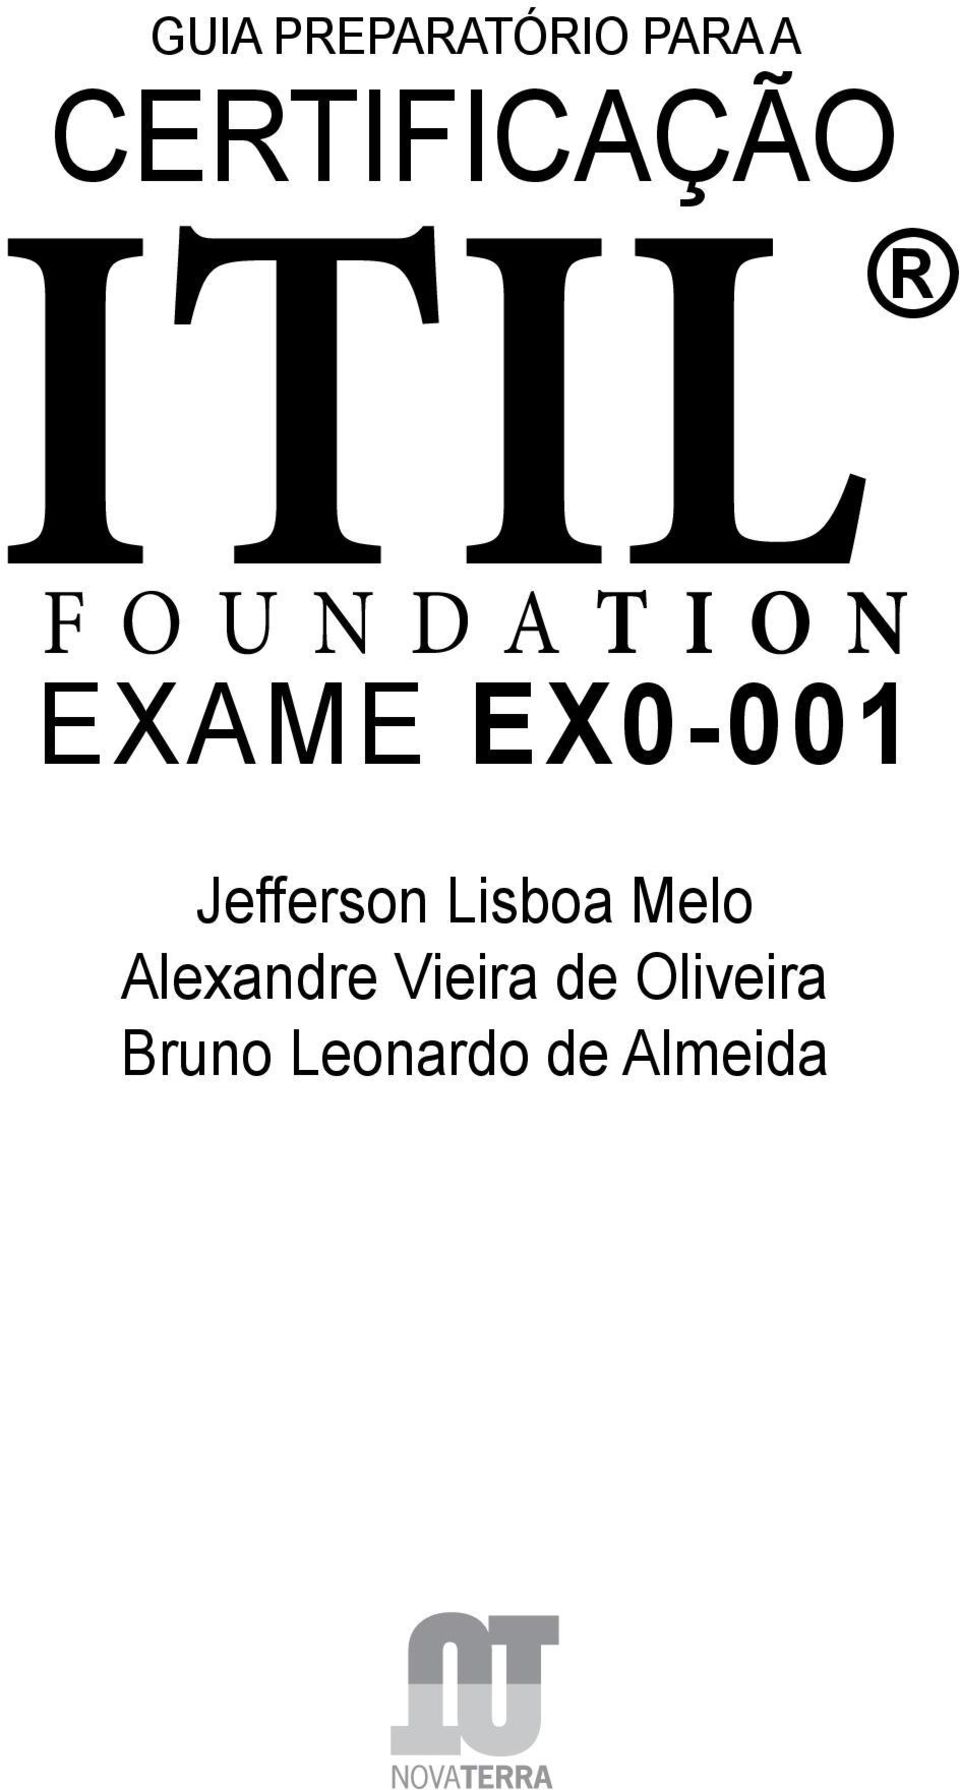 EX0-001 Jefferson Lisboa Melo